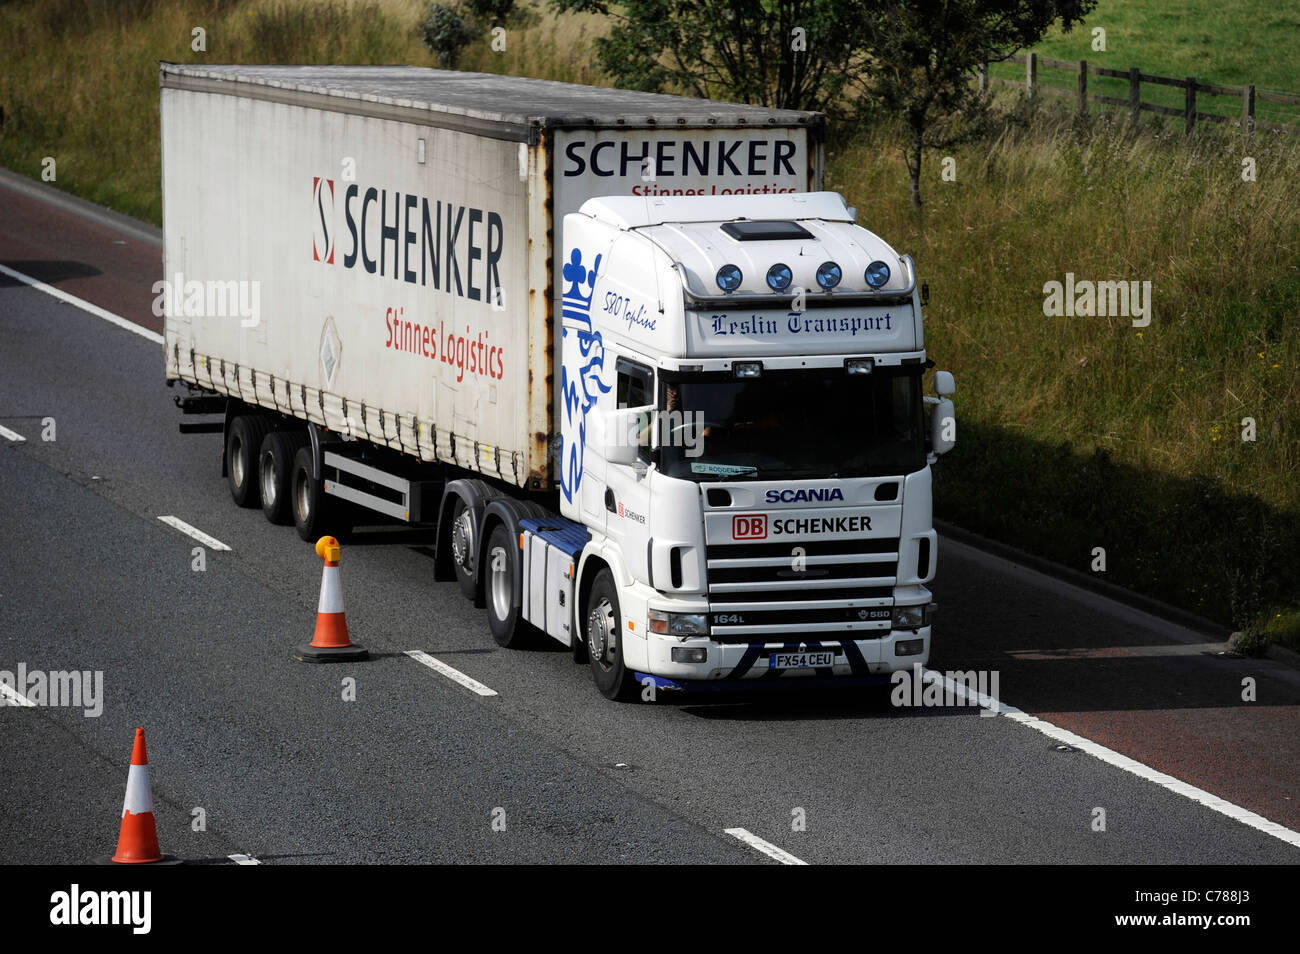 Schenker Logistics carrello Foto Stock